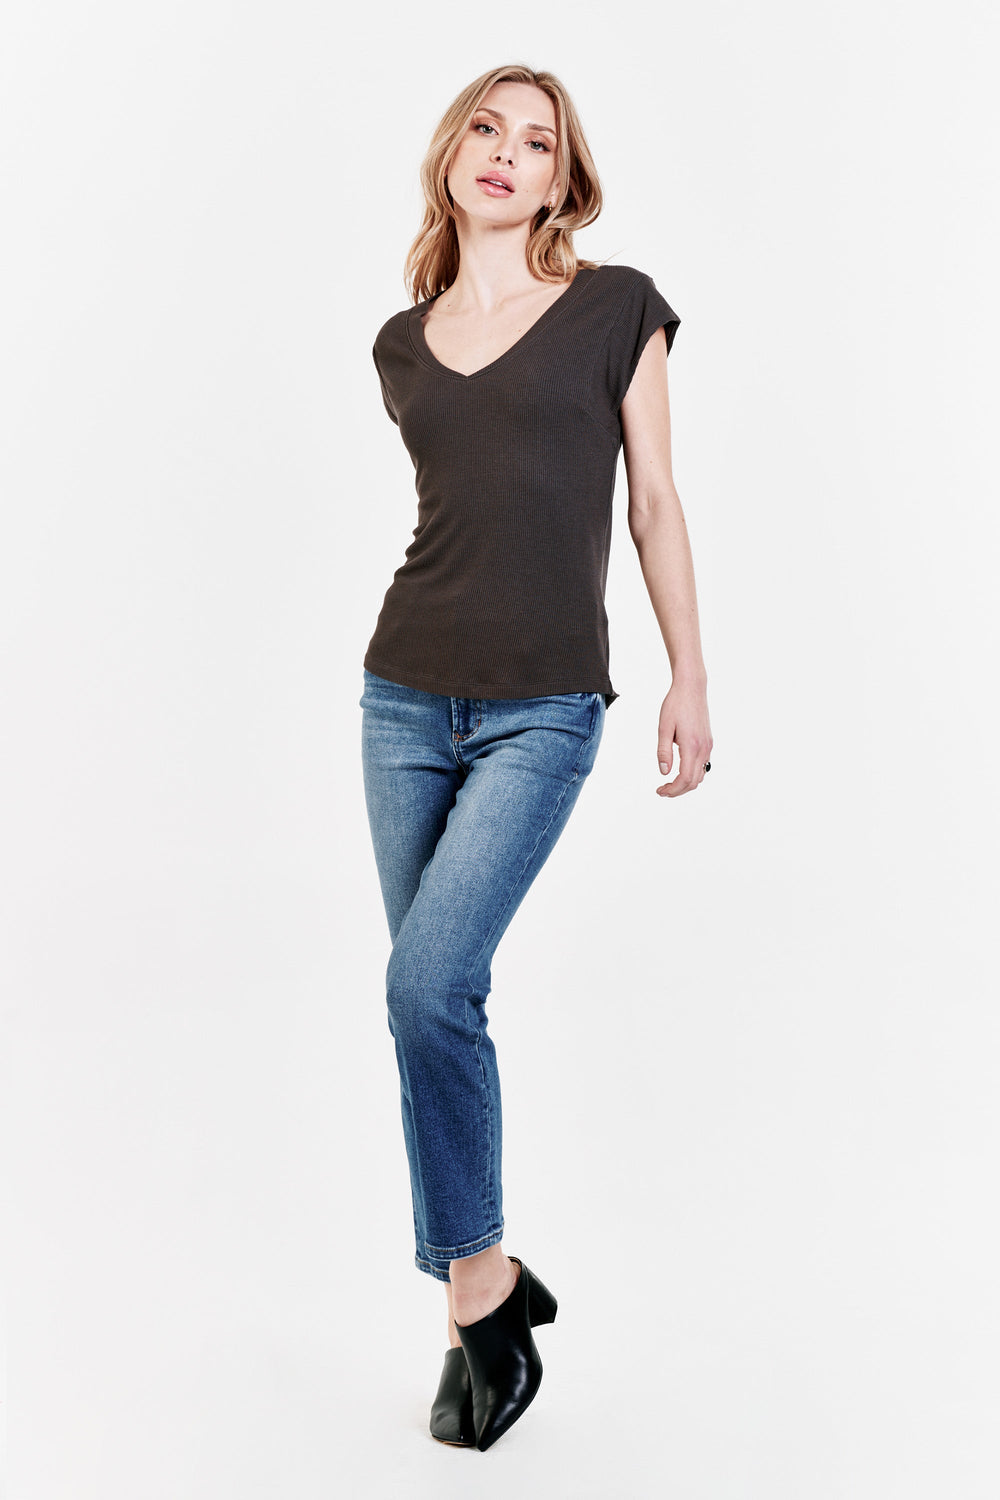 image of a female model wearing a URI THERMAL V-NECK TOP ONYX DEAR JOHN DENIM 